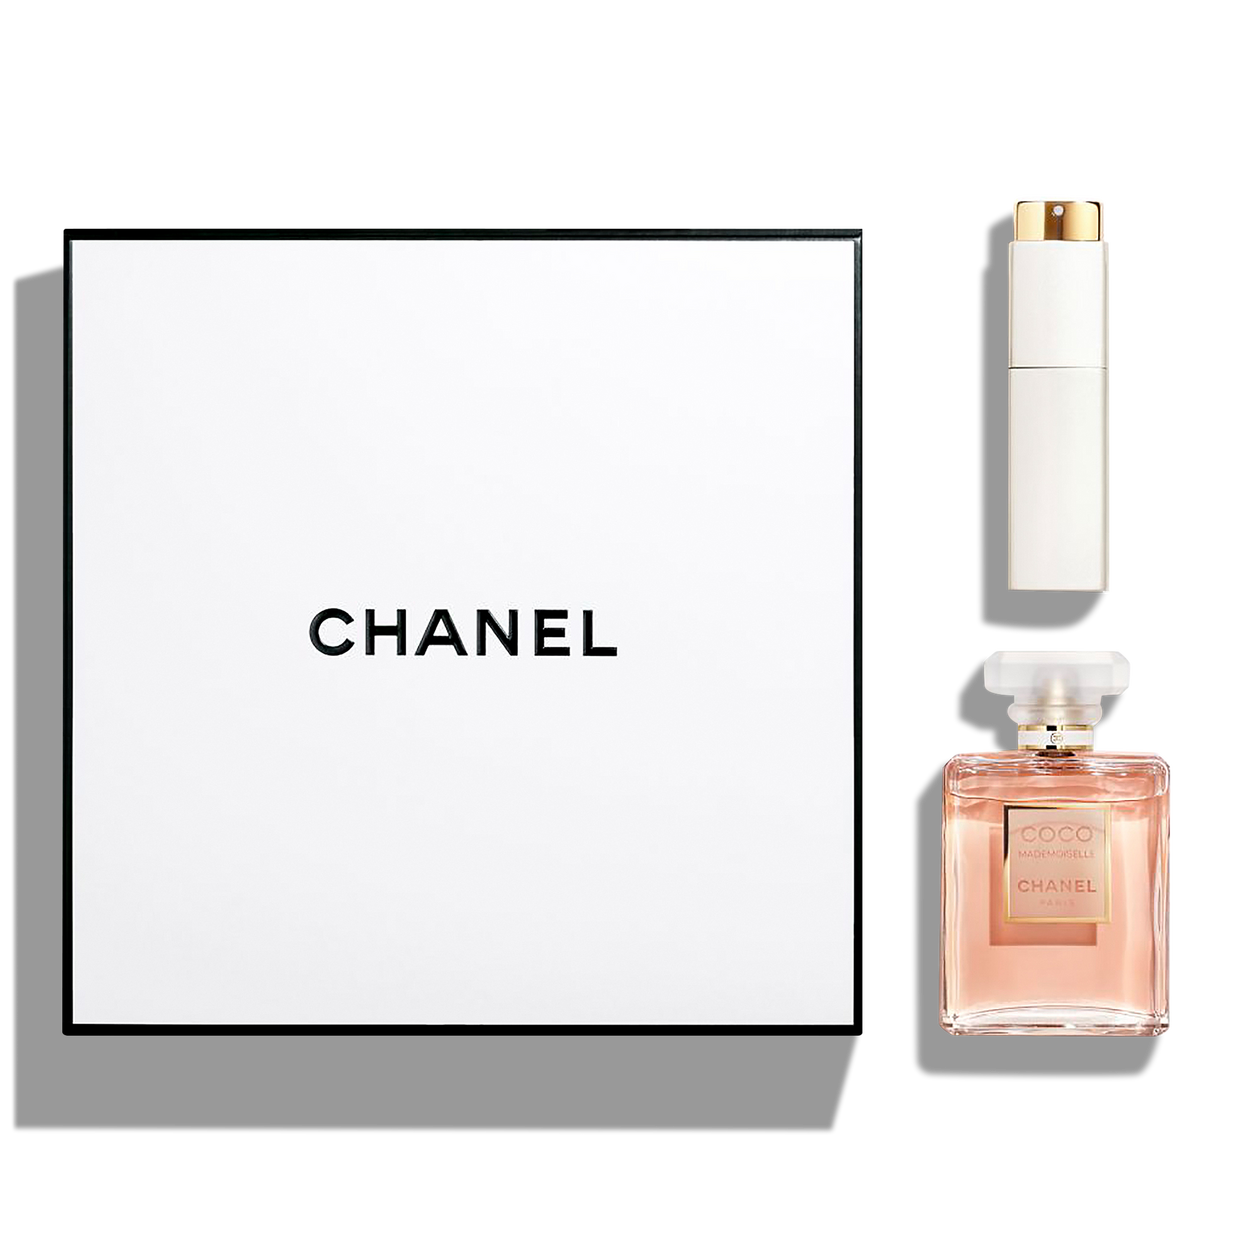 CHANEL COCO MADEMOISELLE Eau de Parfum Spray With Gift Box